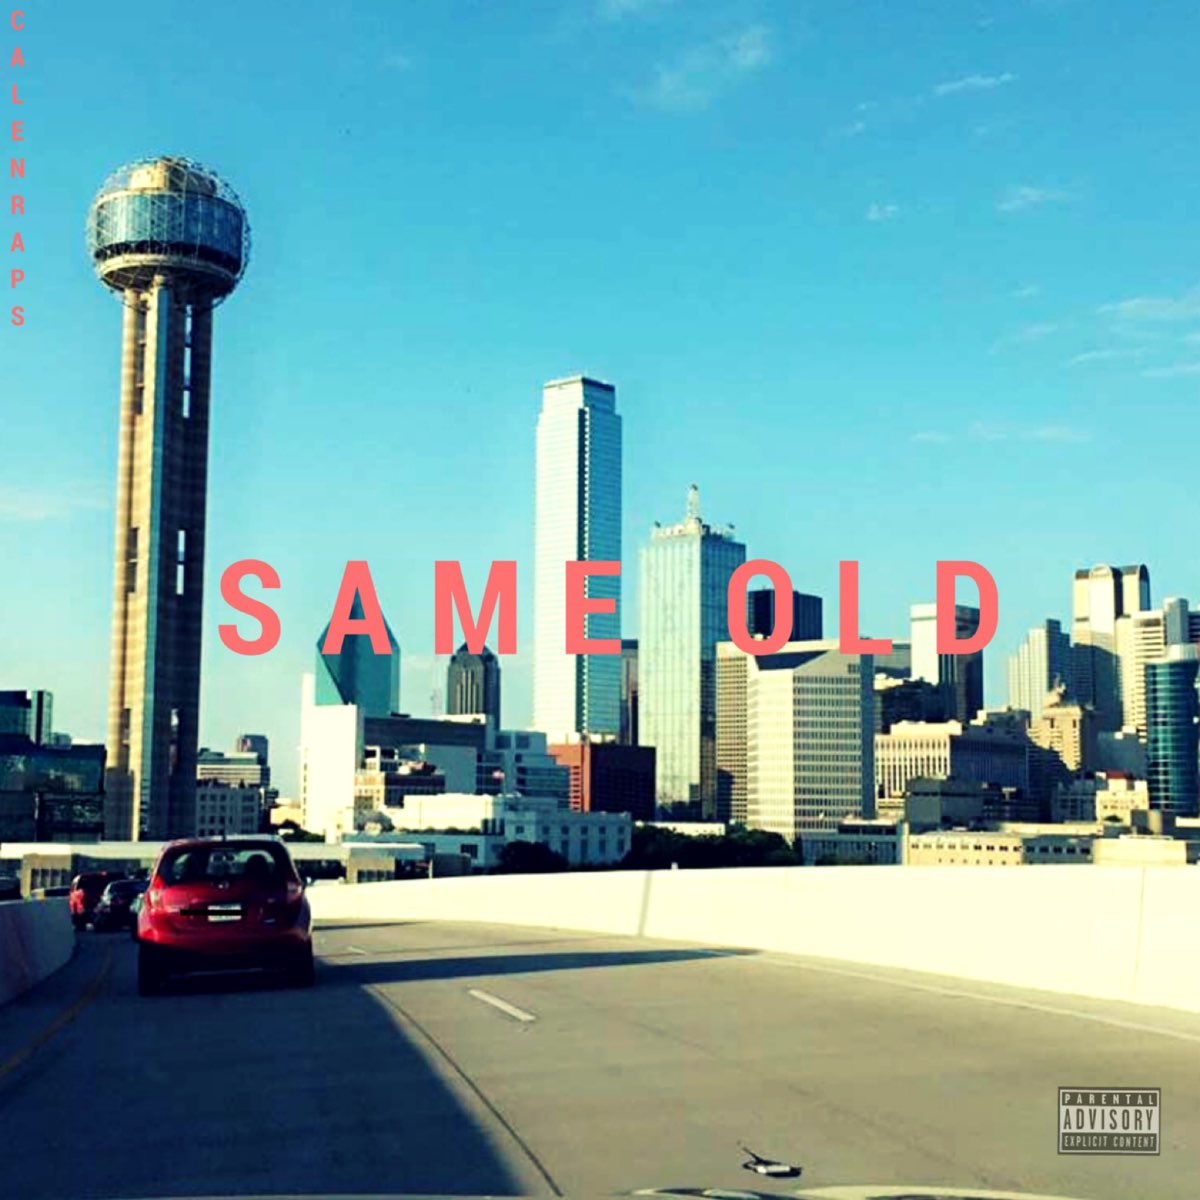 Same Old Mistakes (feat. Whitesand) - Single - Album by Kaush - Apple Music